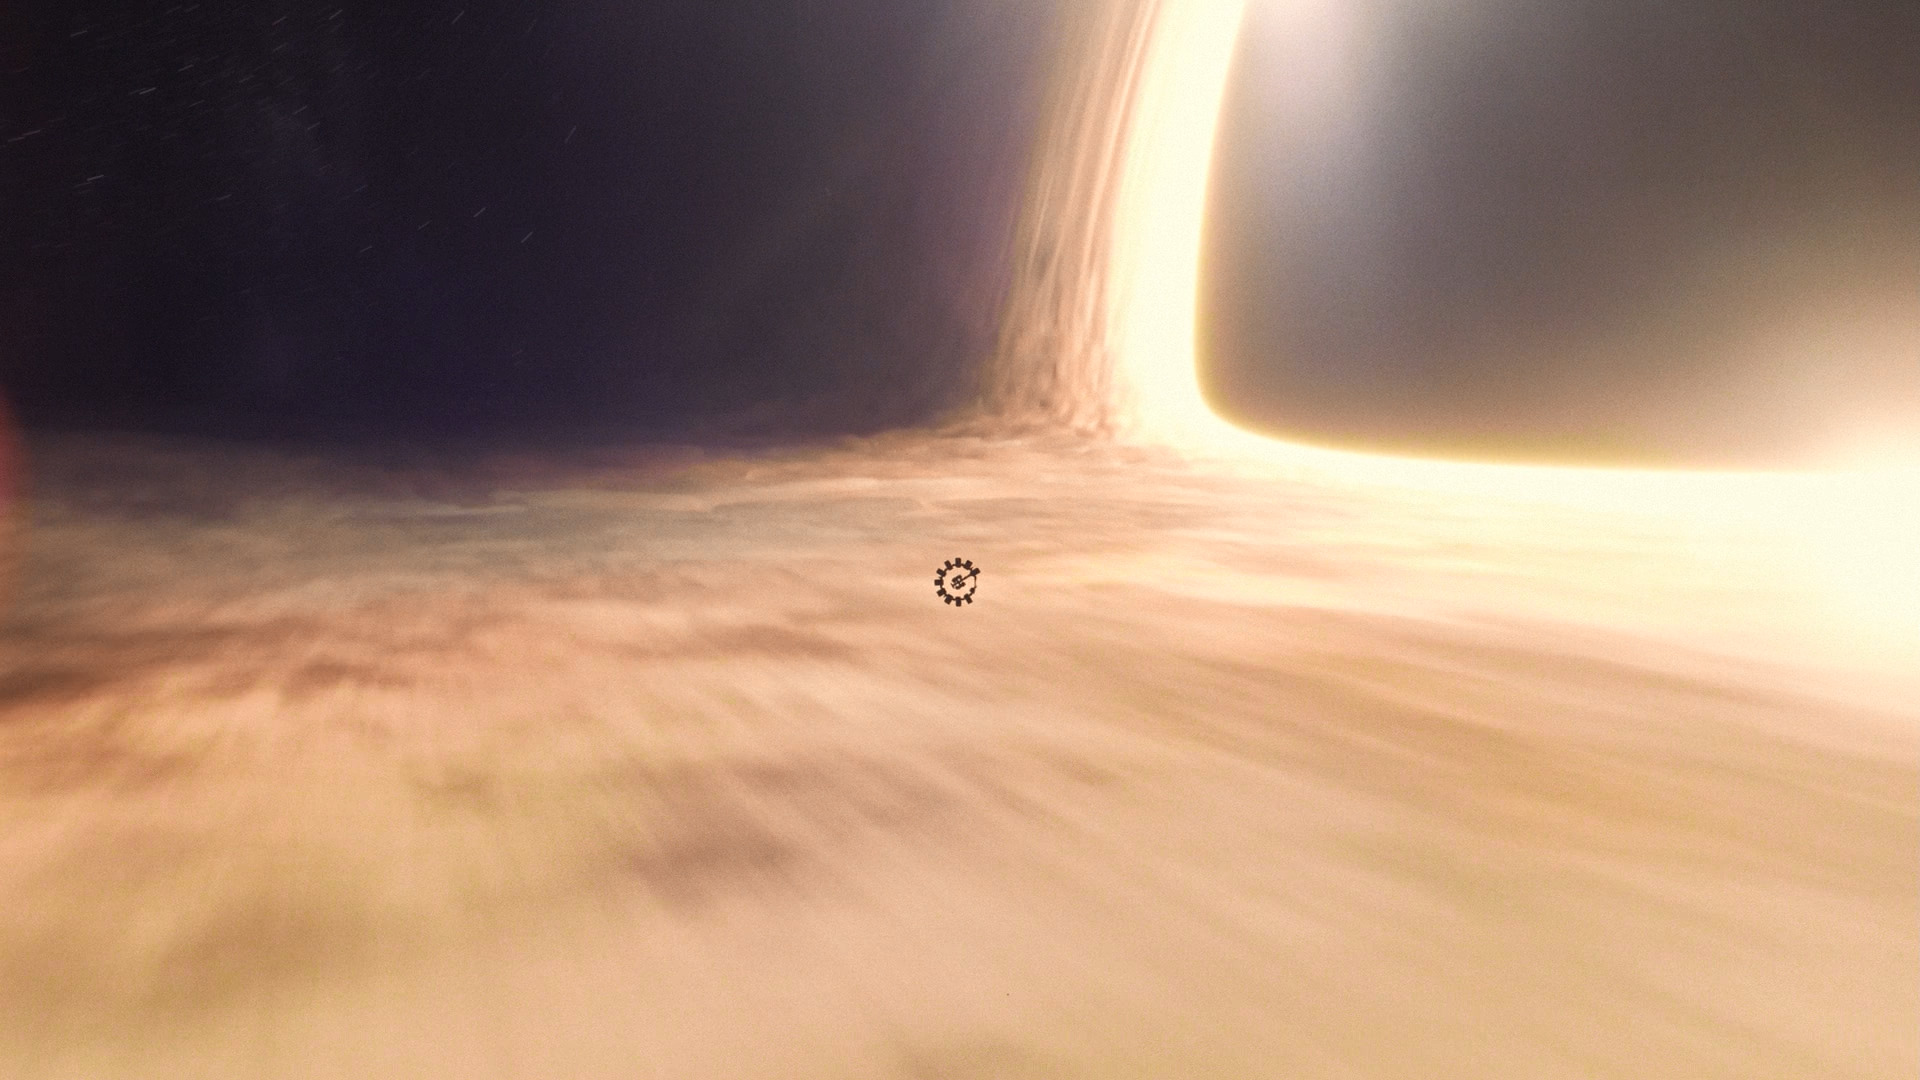 Interstellar (movie), Gargantua, Black Holes Wallpaper